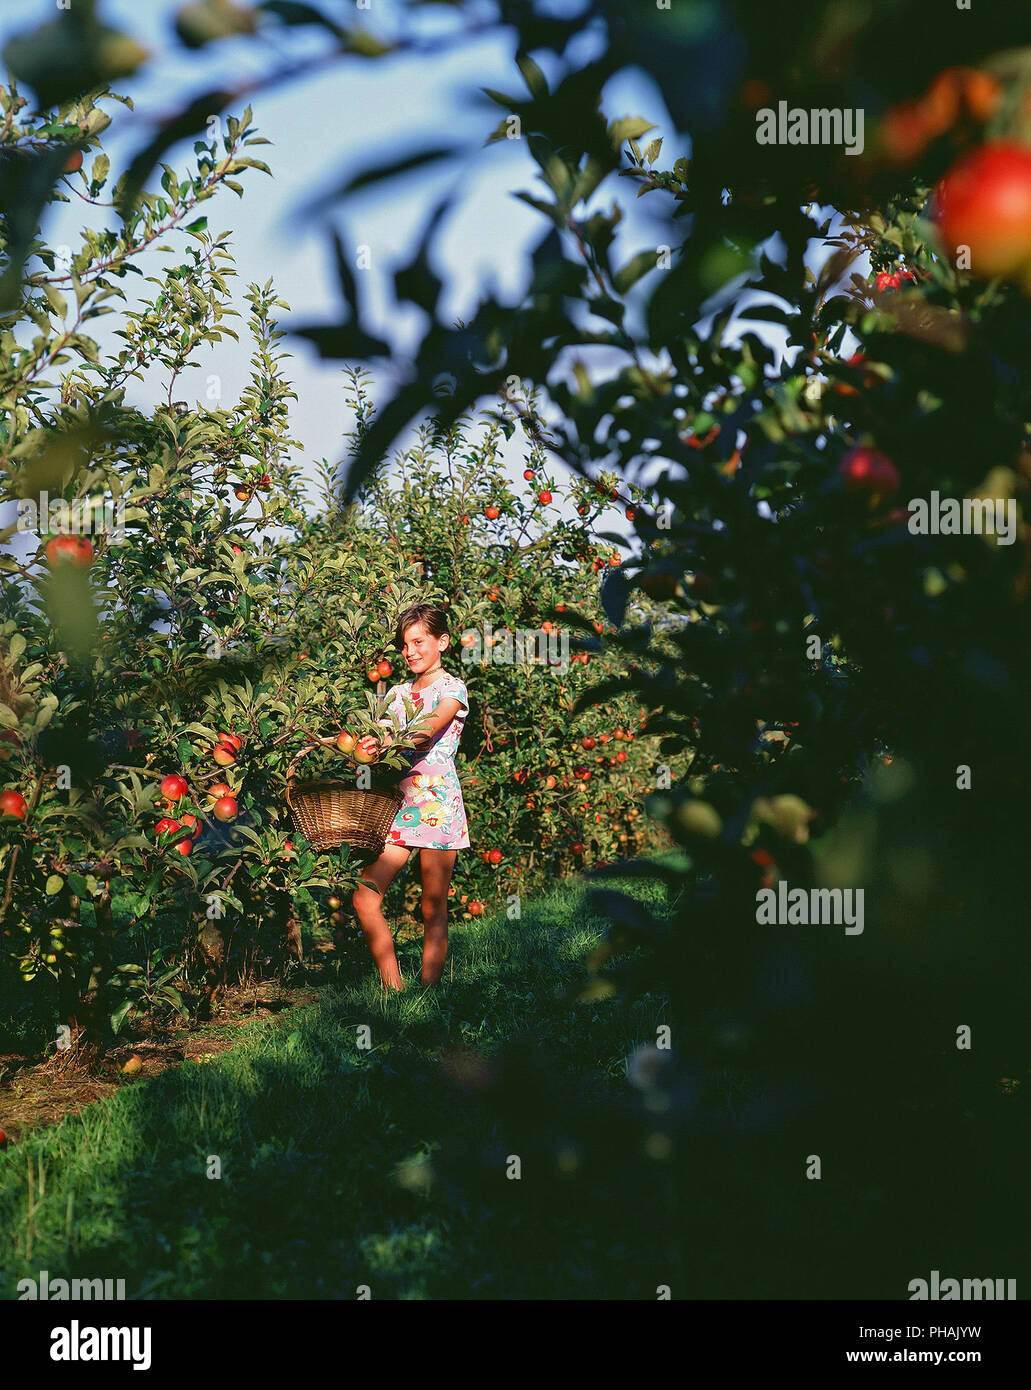 Enfant cueillant des pommes - Child picking apples on trees Stock Photo